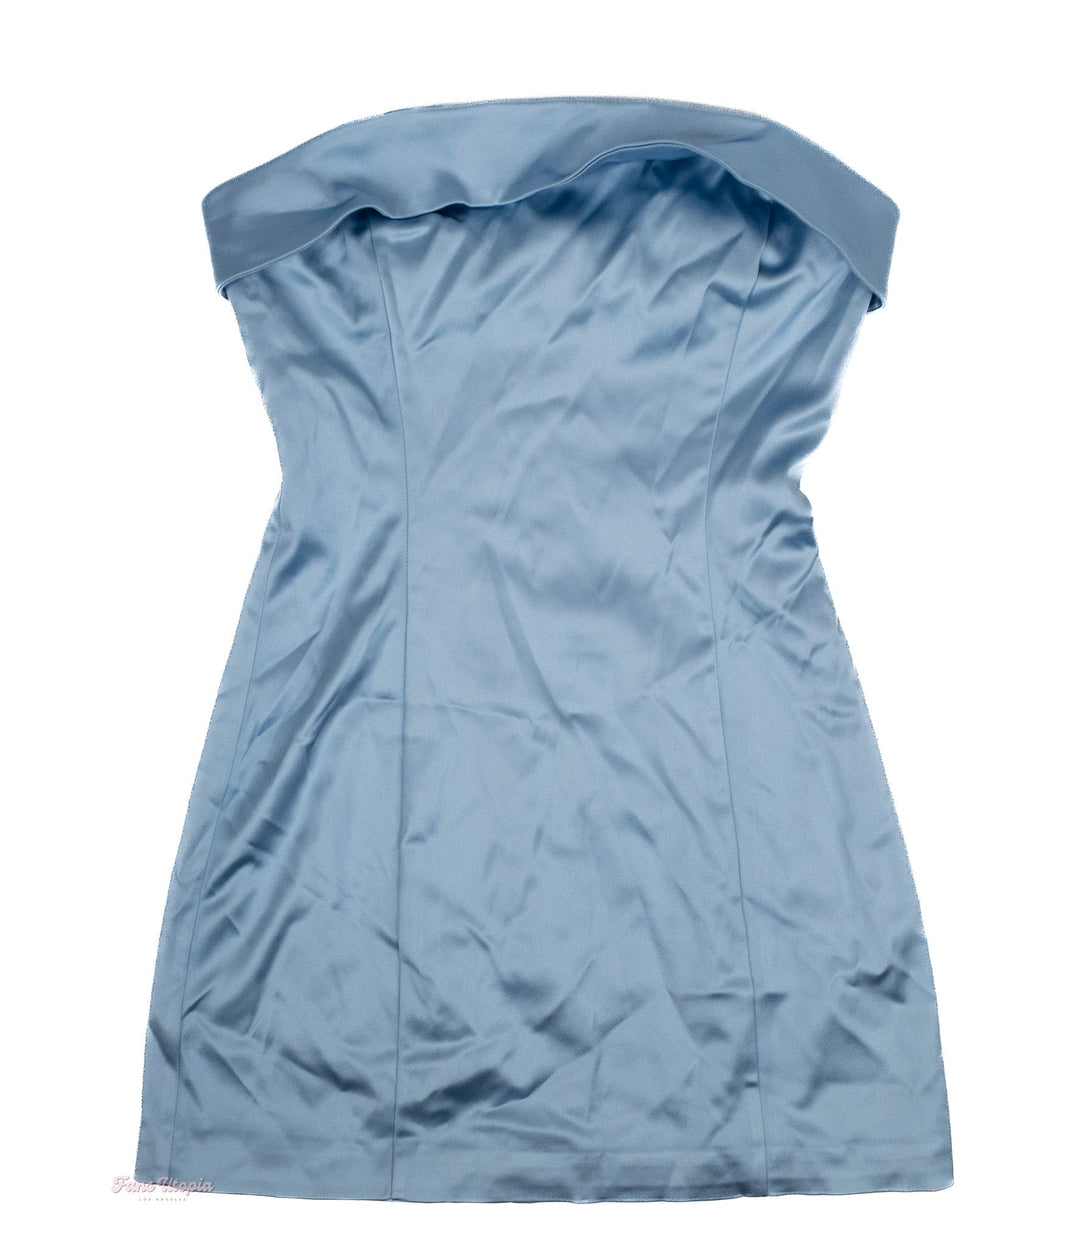 Riley Reid Blue Strapless Dress